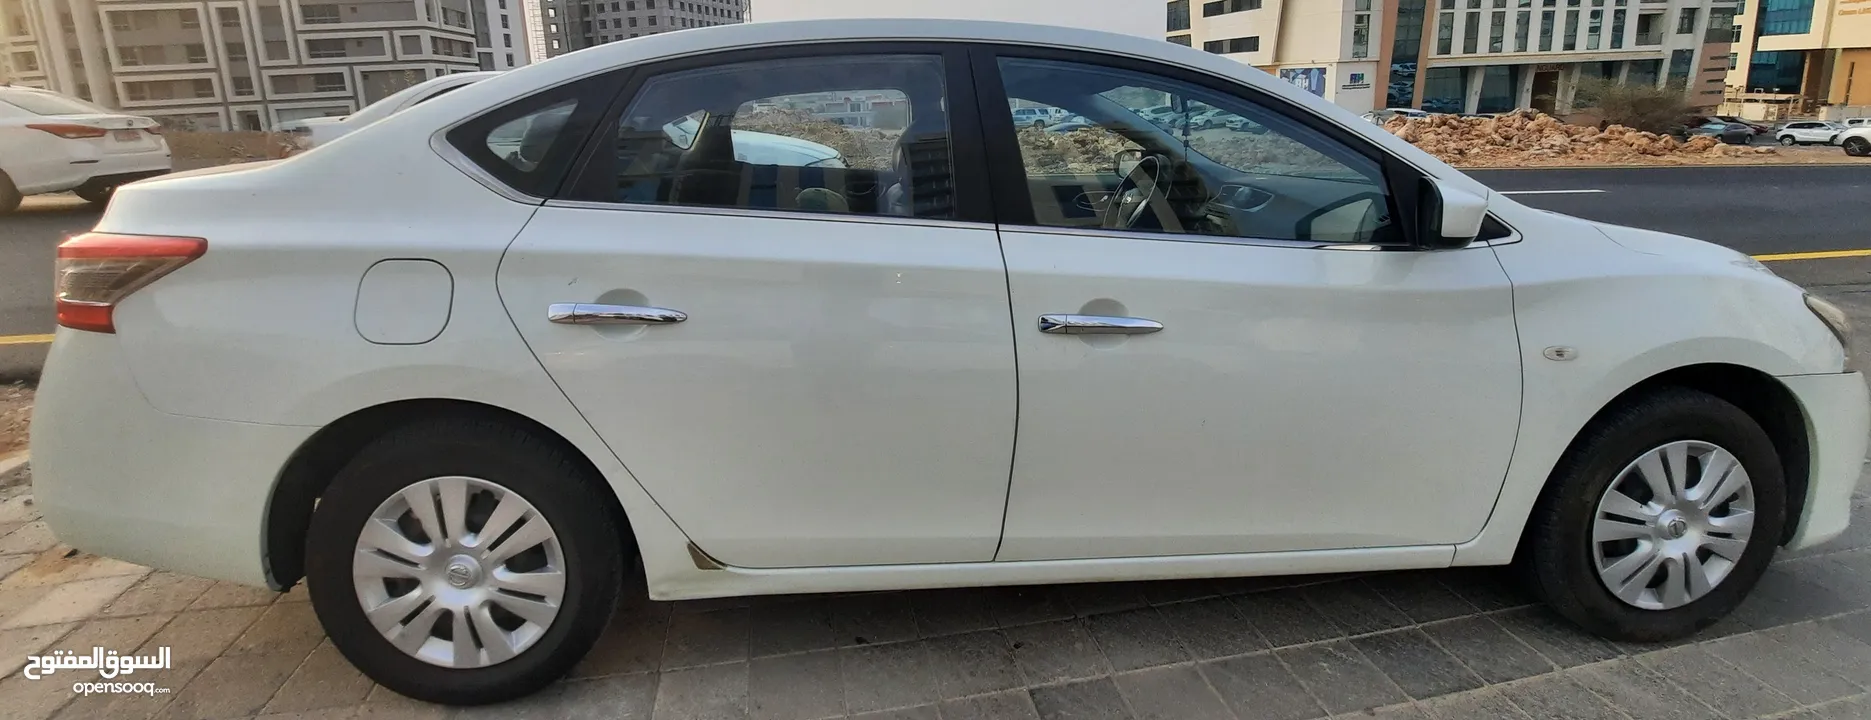 Nissan Sentra (2013) Oman Car